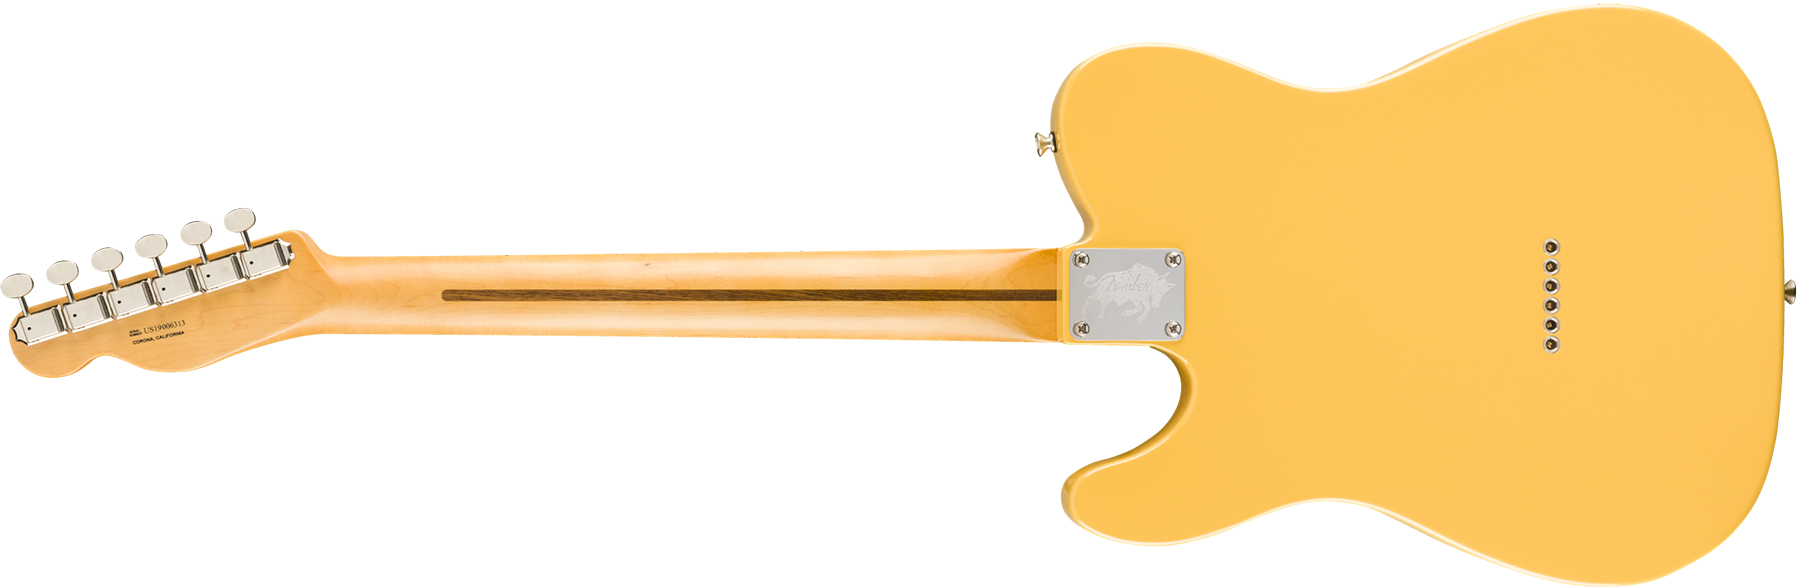 Fender Britt Daniel Tele Thinline Signature Ss Mn - Amarillo Gold - Semi-hollow electric guitar - Variation 1